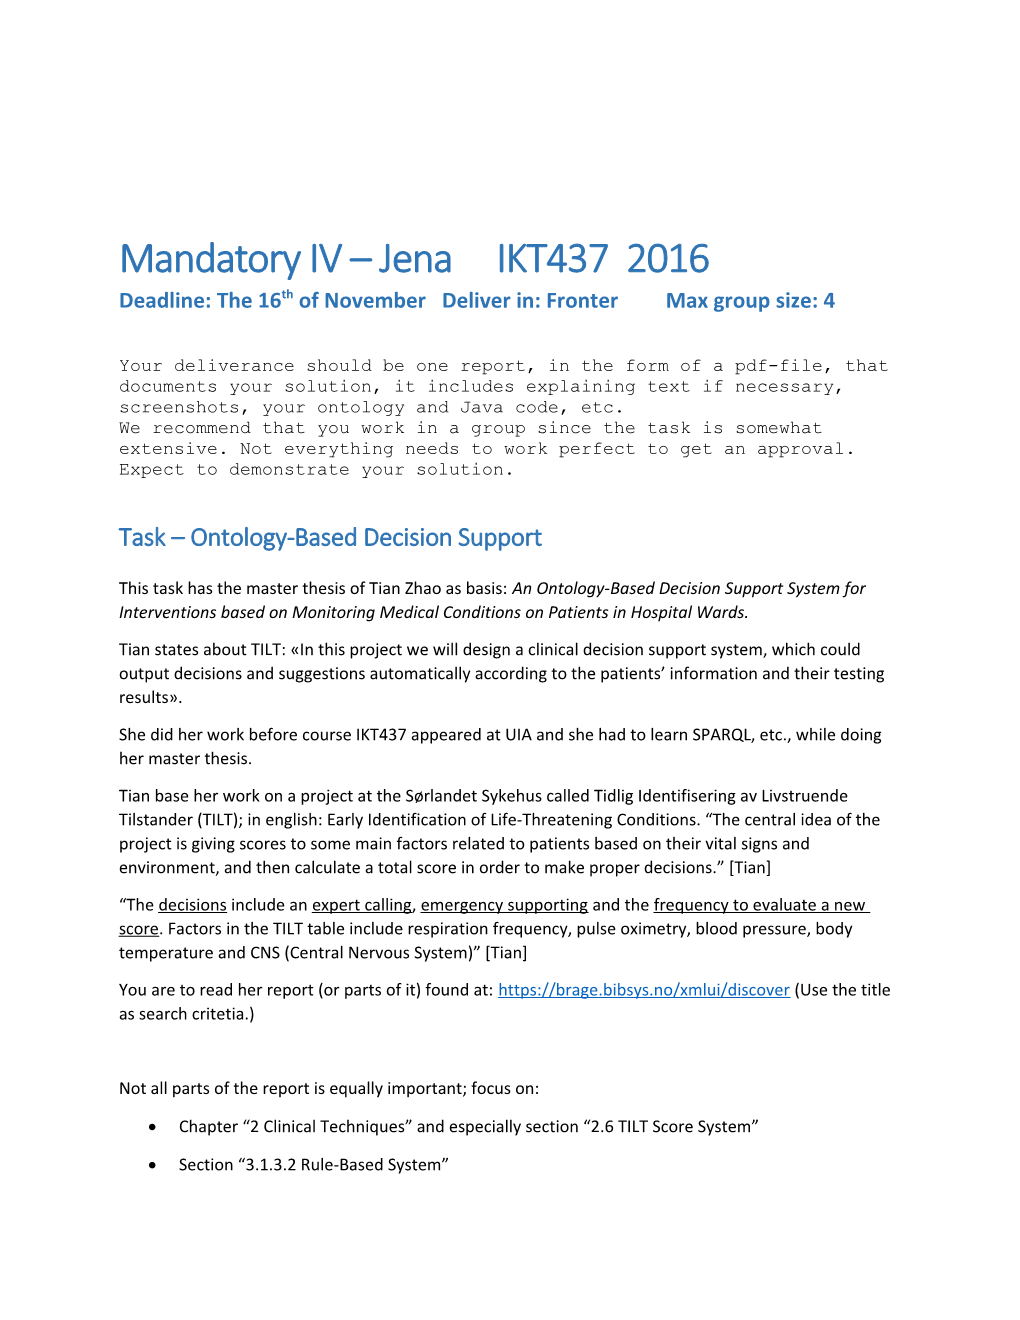 Mandatory IV Jena IKT437 2016 Deadline: the 16Th of November Deliver In: Fronter Max Group